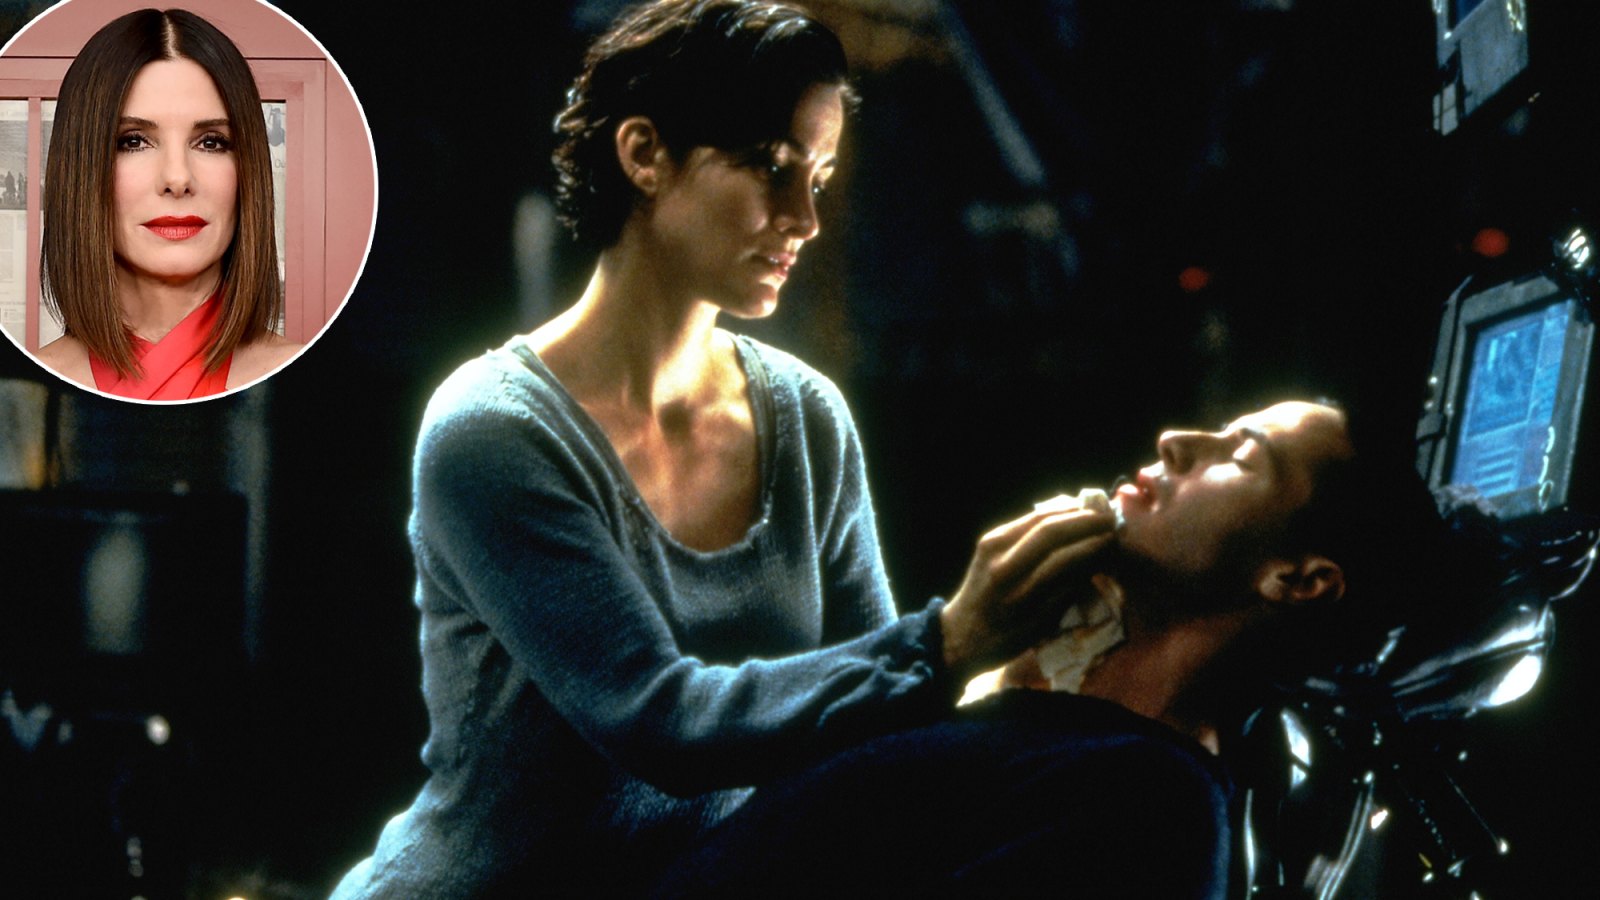 Sandra Bullock Almost Played Keanu Reeves The Matrix Role